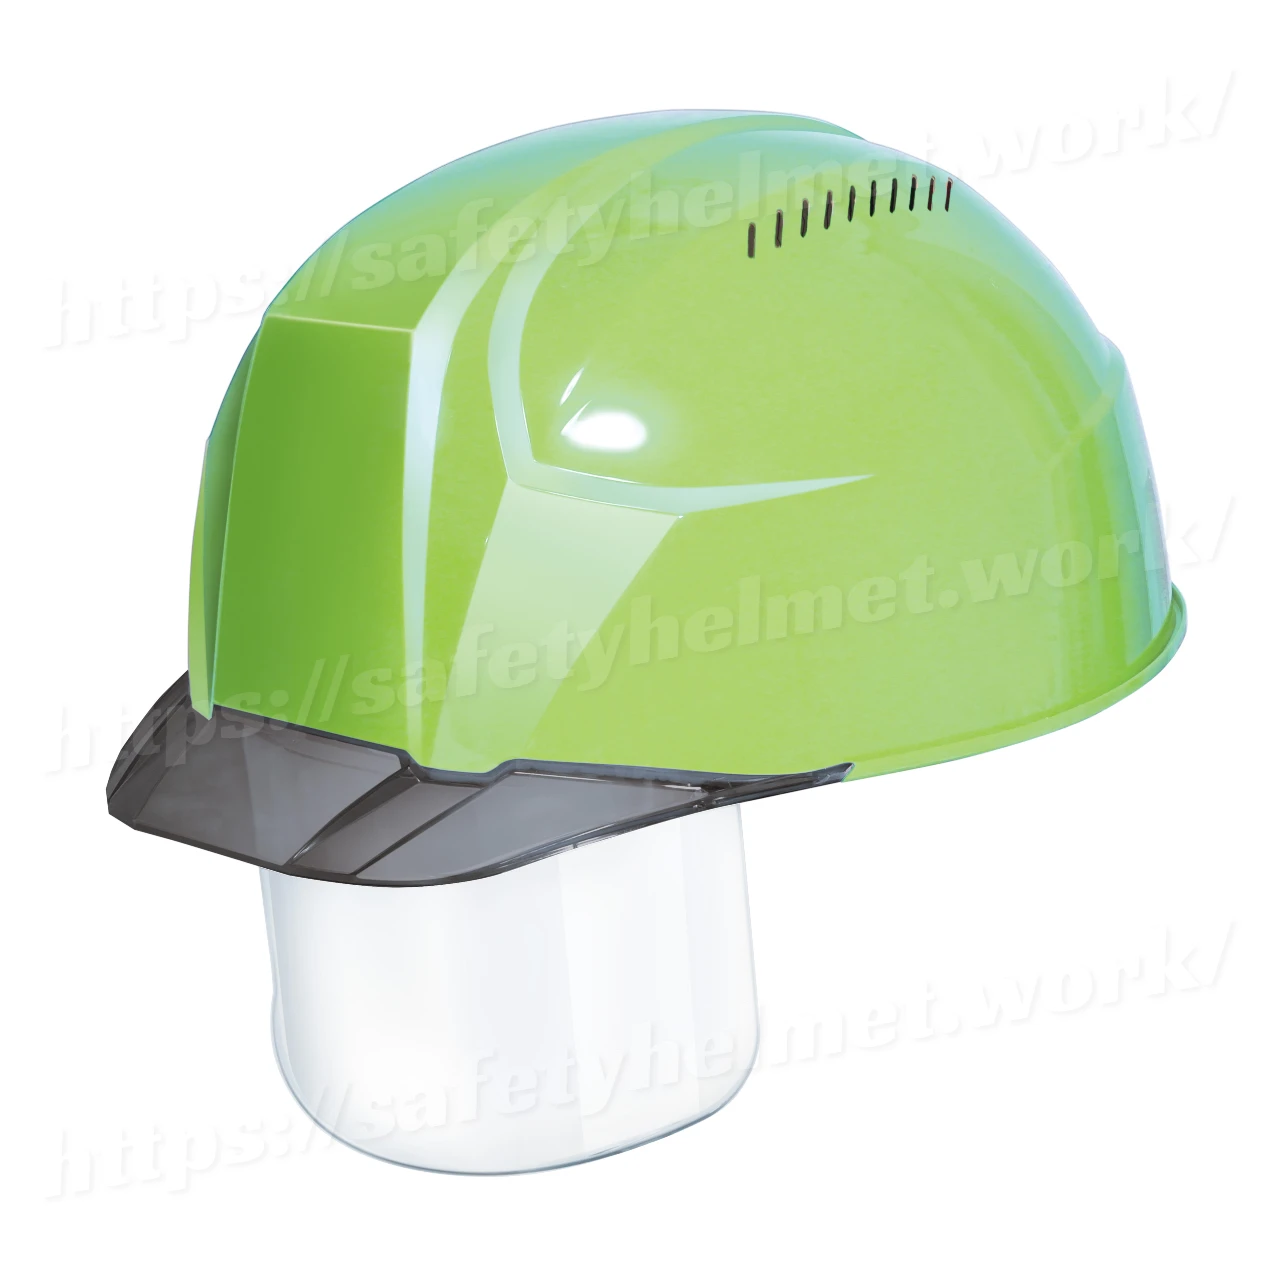 dic-lightest-helmet-keijin-shield-aa23csv-freshgreen-smoke